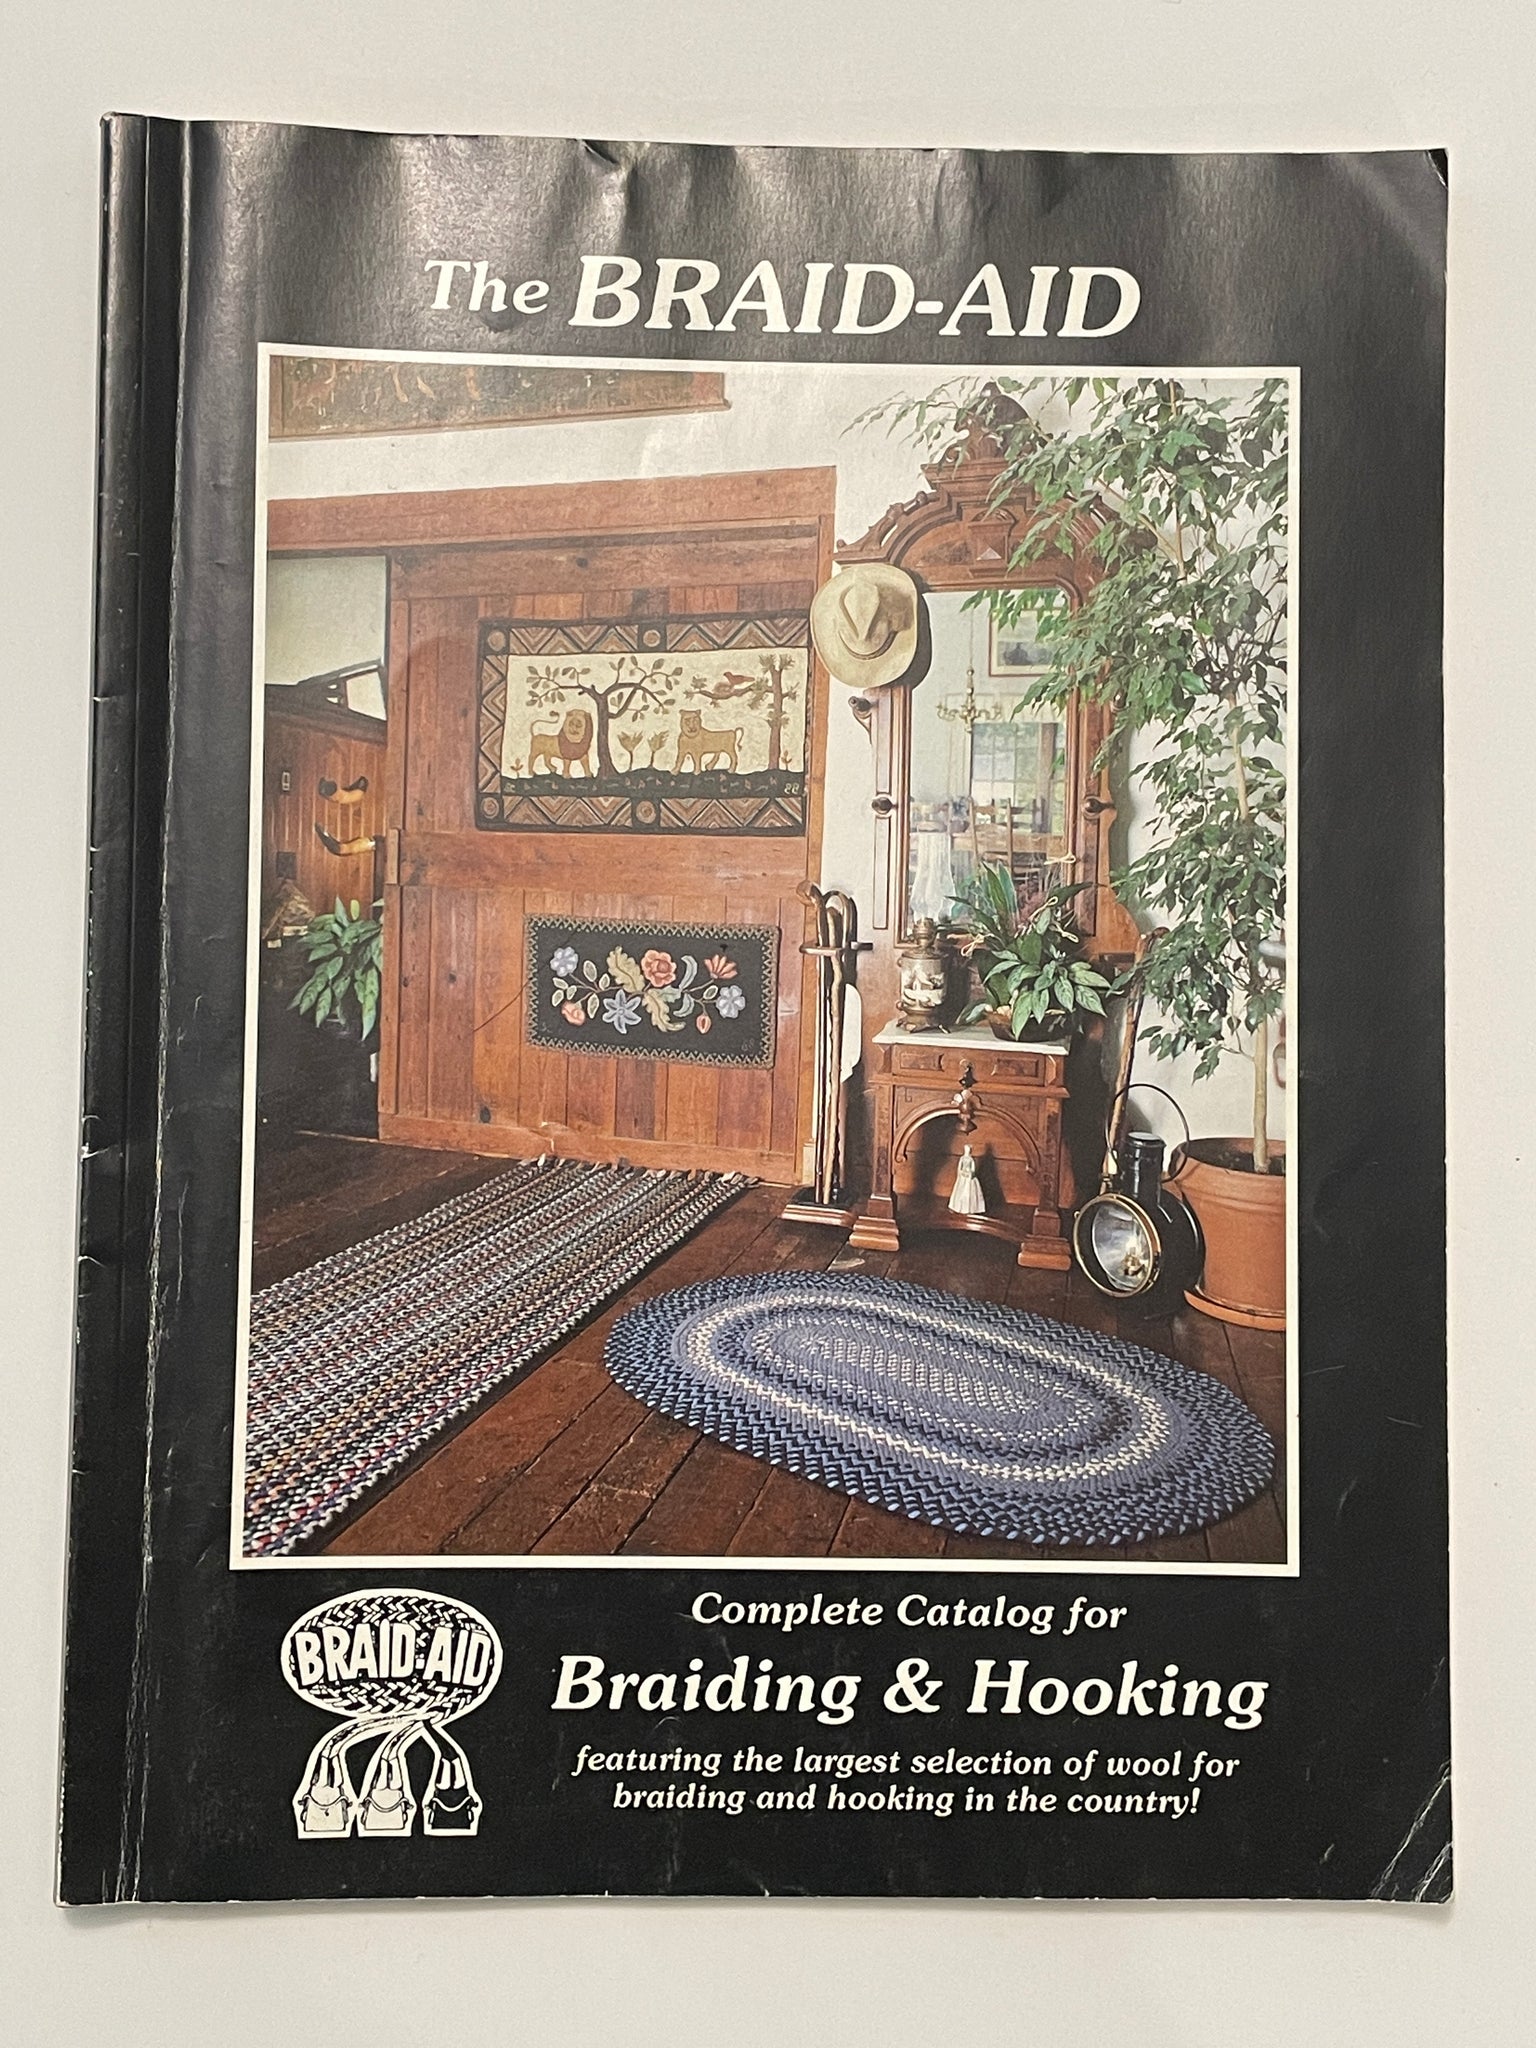 SALE Braid-Aid Product Catalog - Braided and Hook Rug